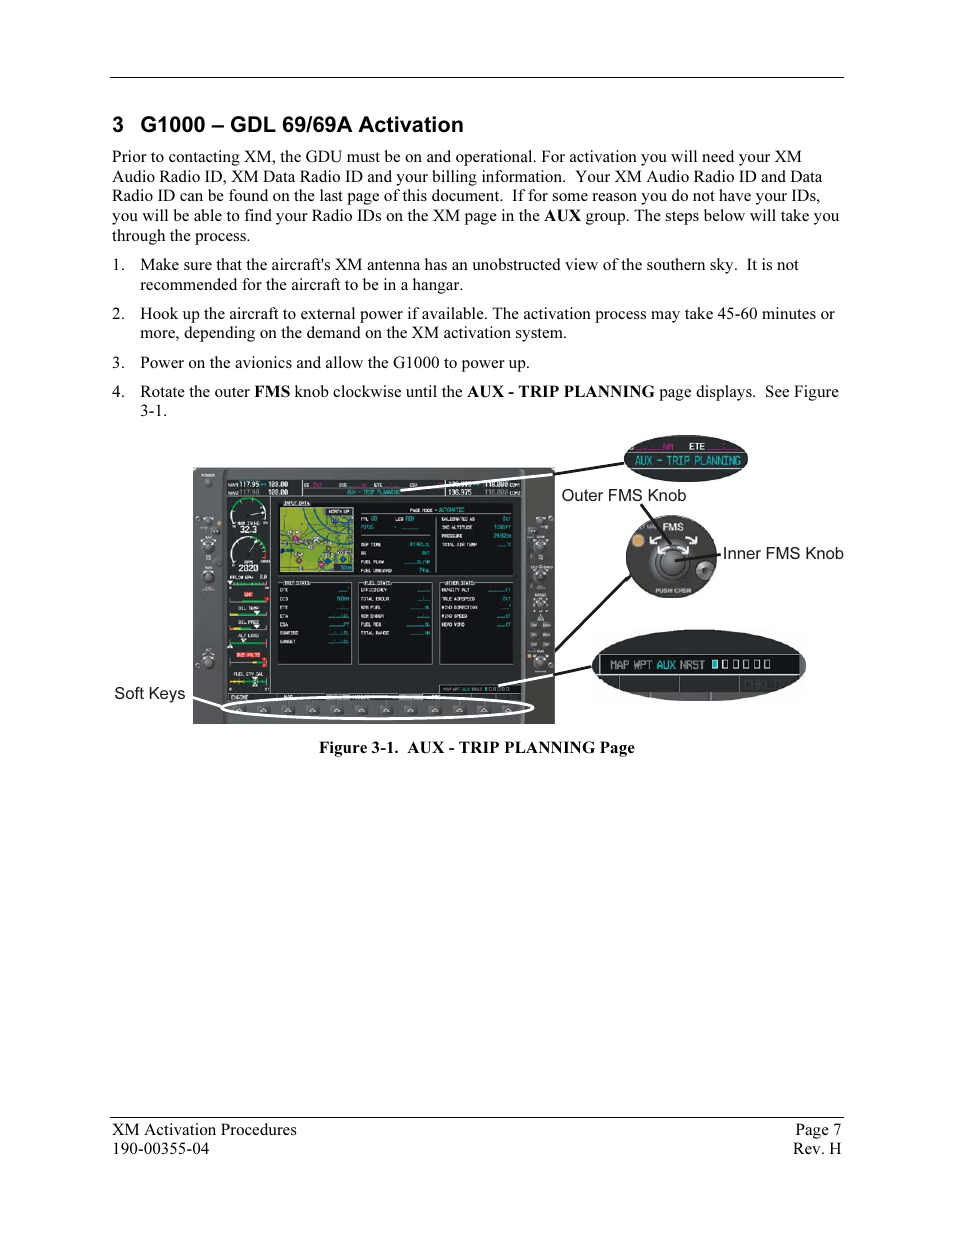 G1000 – gdl 69/69a activation | Garmin XM GDL 69 User Manual | Page 13 / 38  | Original mode